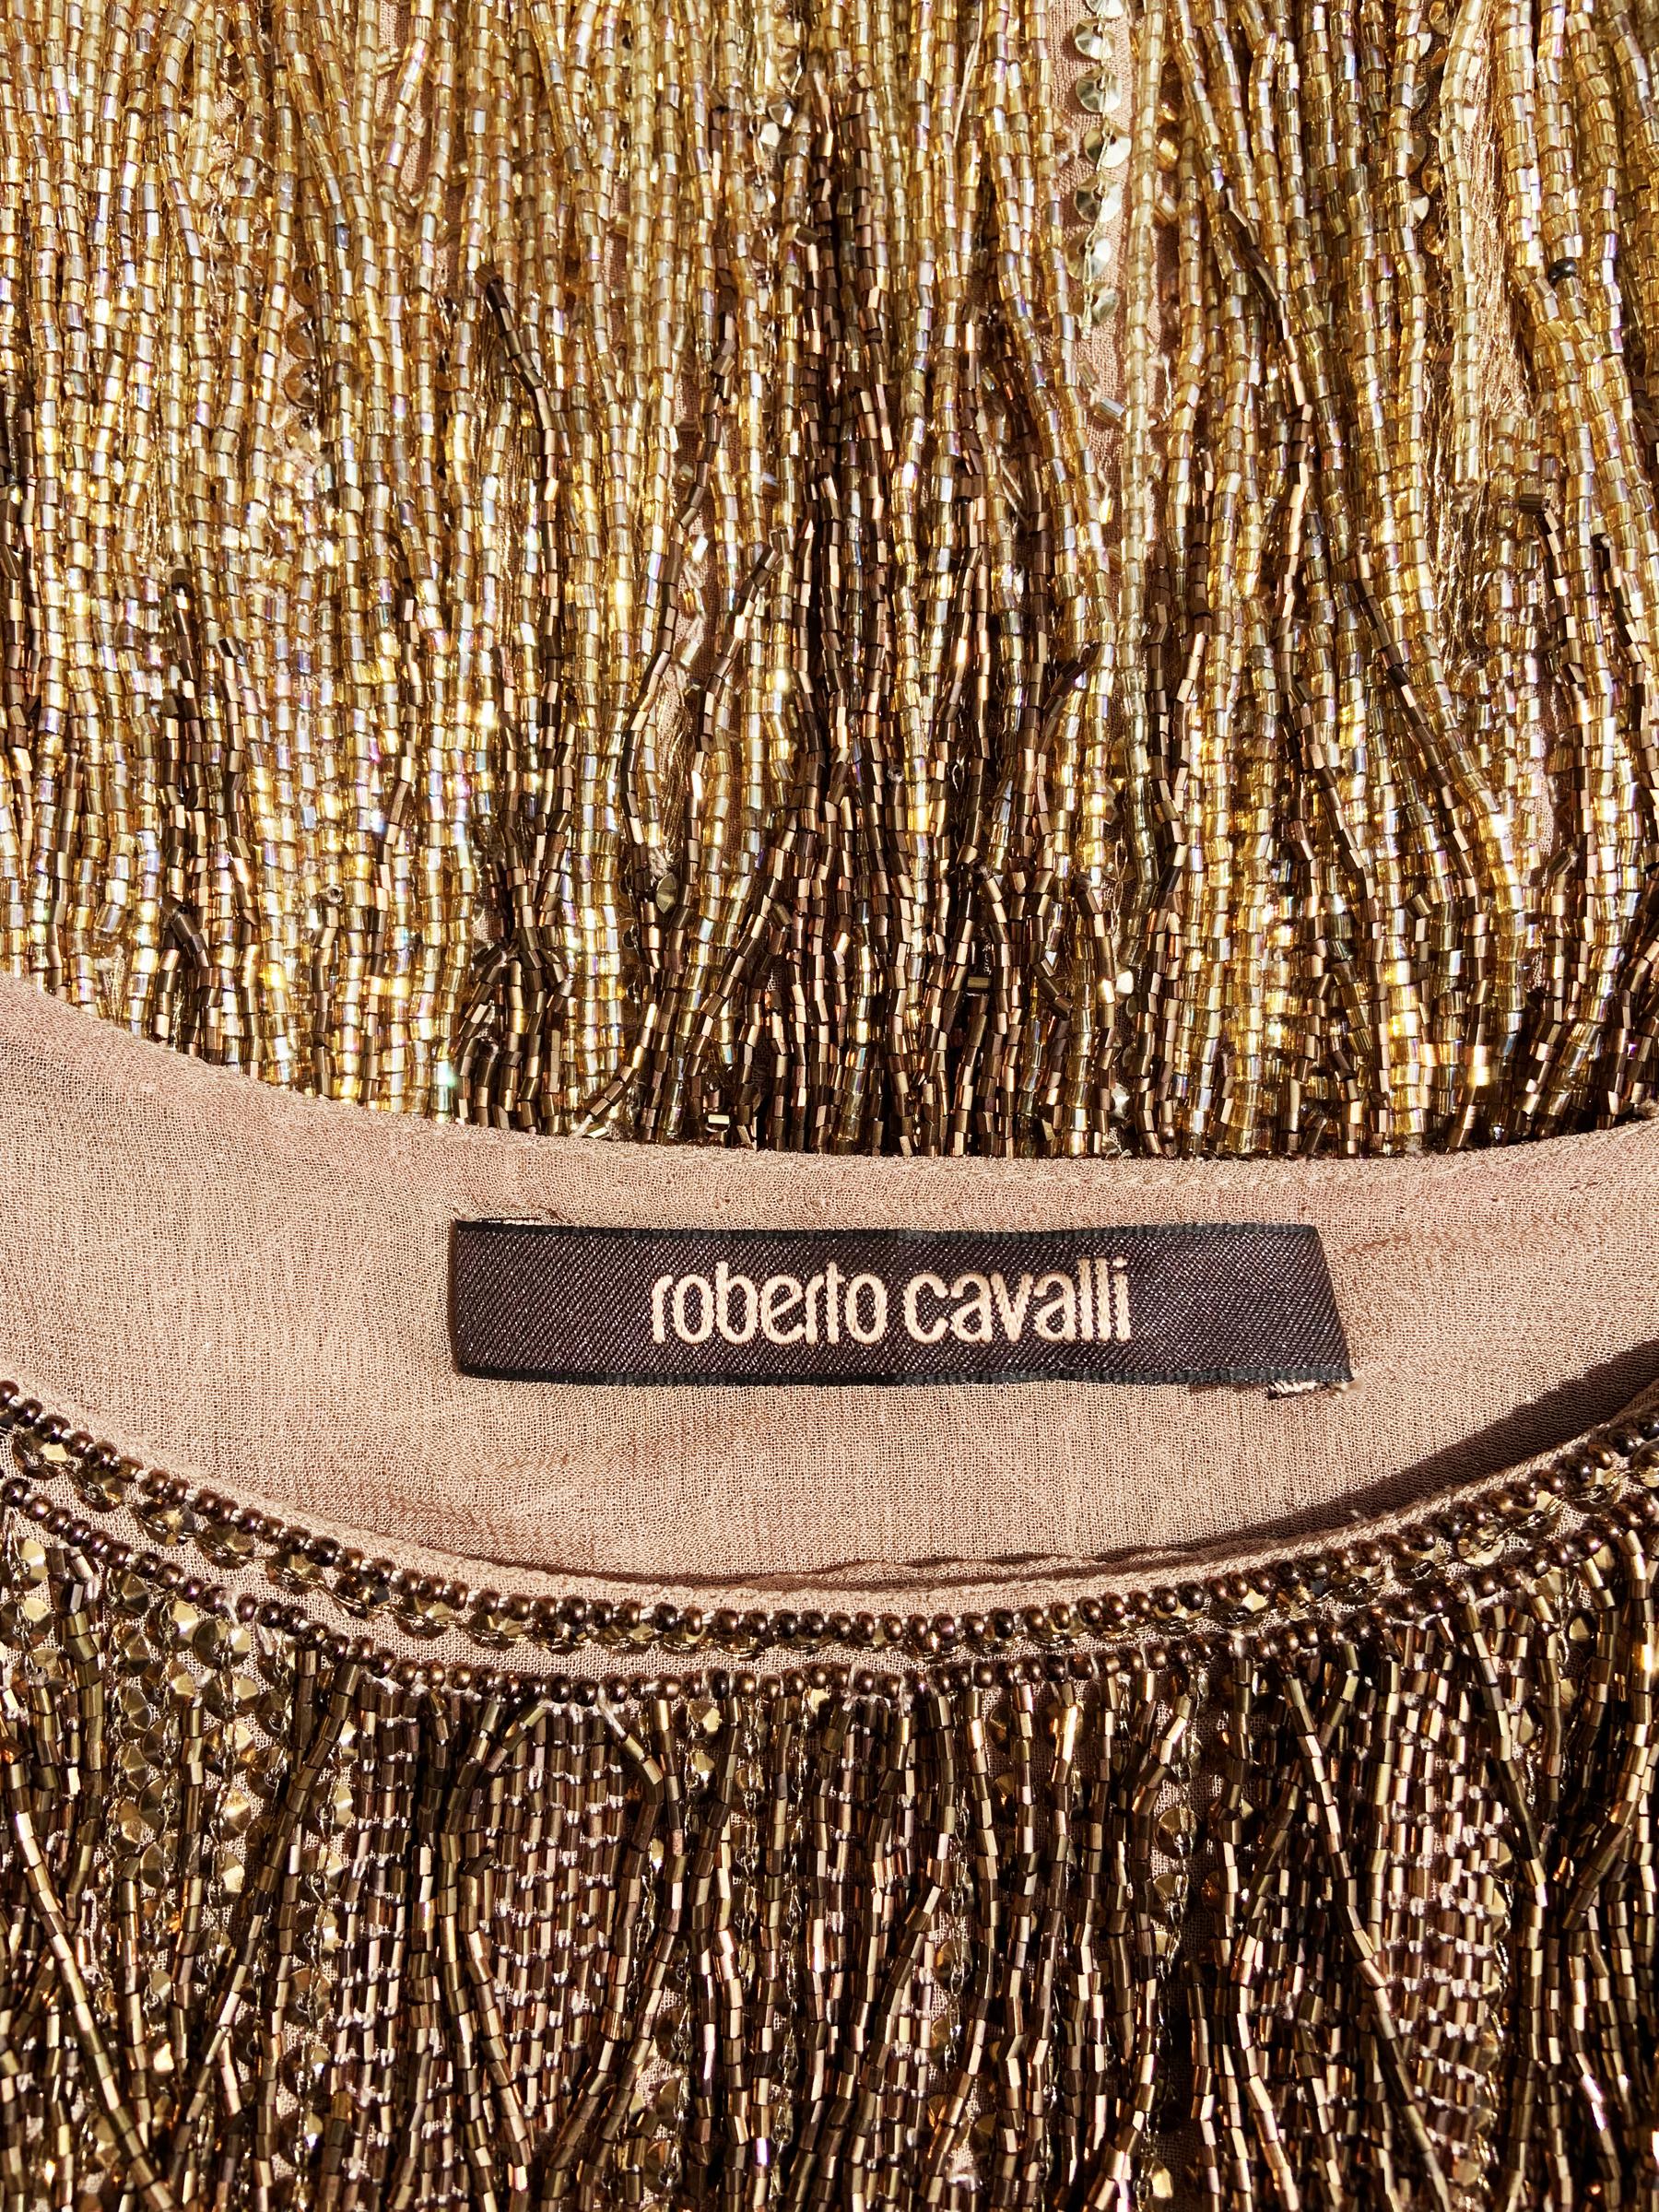 Iconic MUSEUM Roberto Cavalli Fringe Beaded Dress as seen on TAYLOR SWIFT It. 40 9